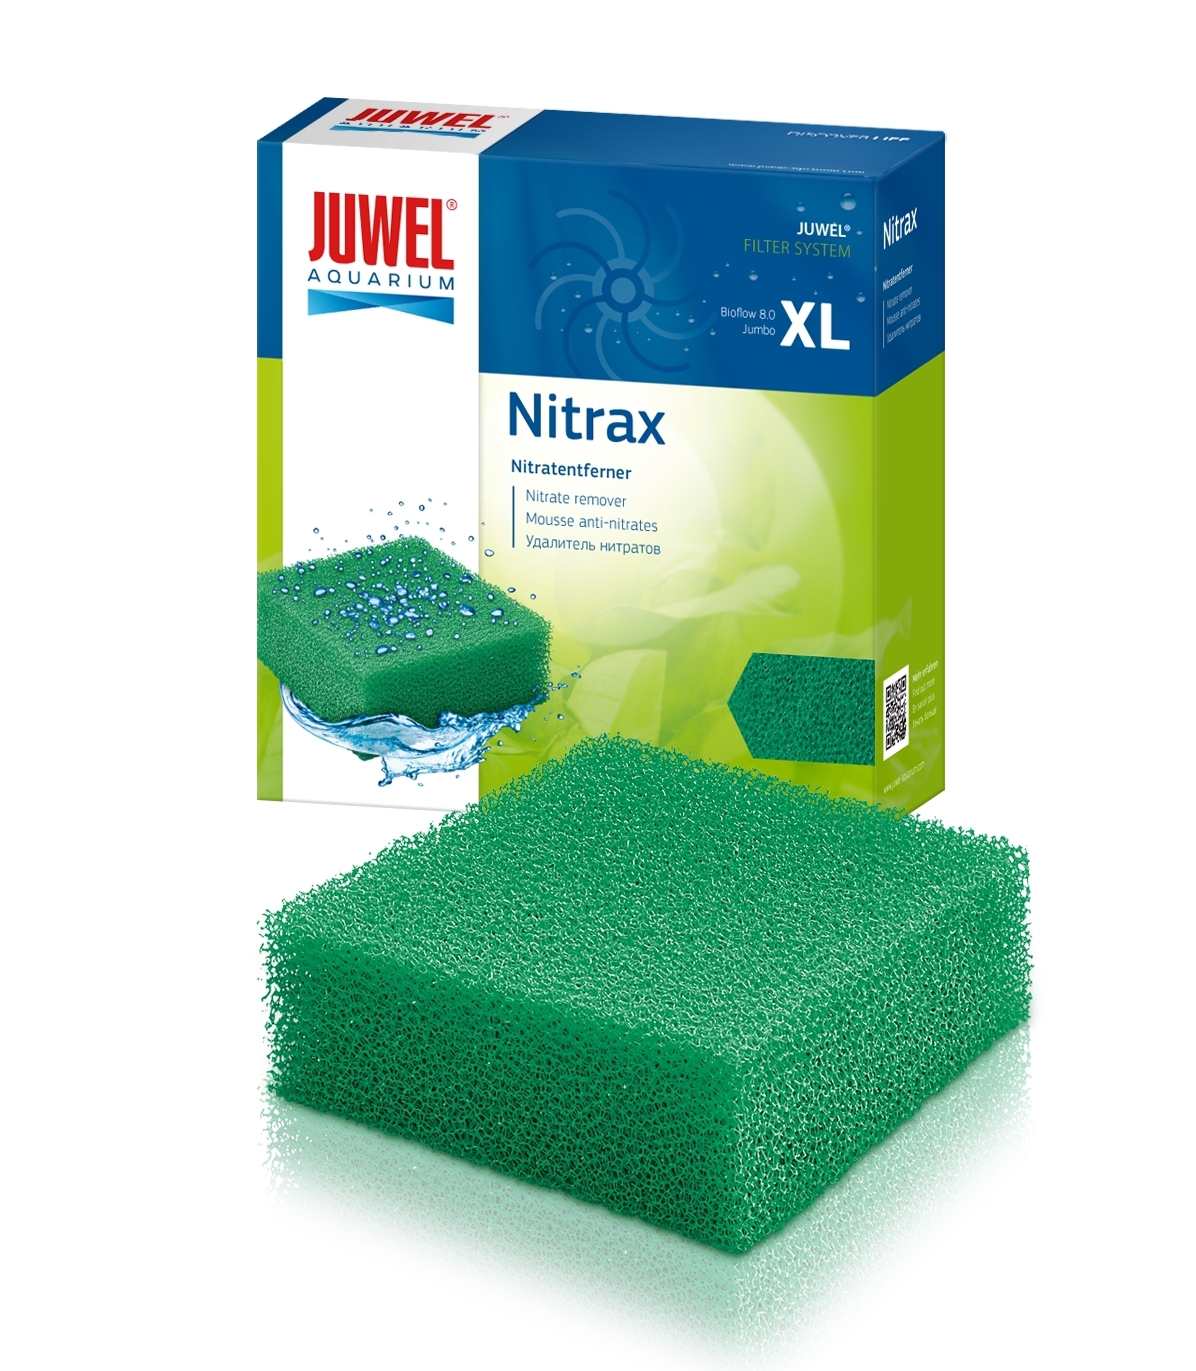 Juwel Filter cartridge - Nitrax Entferner JUMBO / Bioflow 8.0 / XL